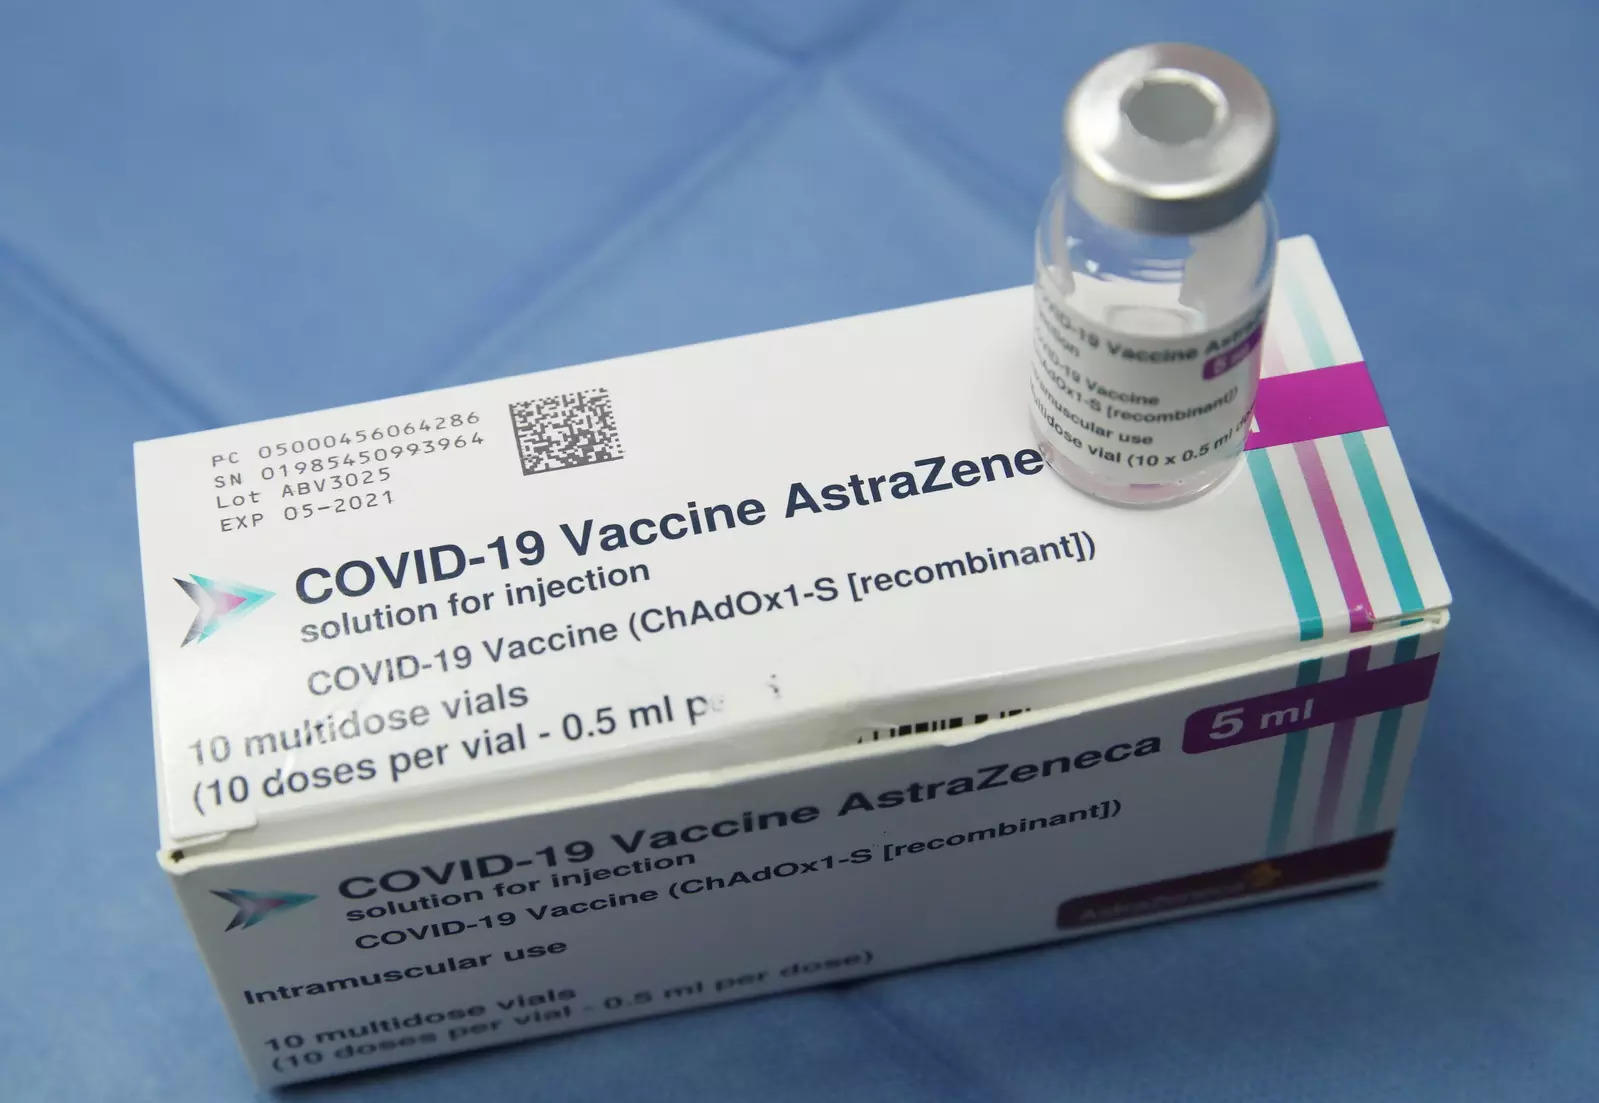 WHO authorizes AstraZeneca's Covid vaccine for emergency use